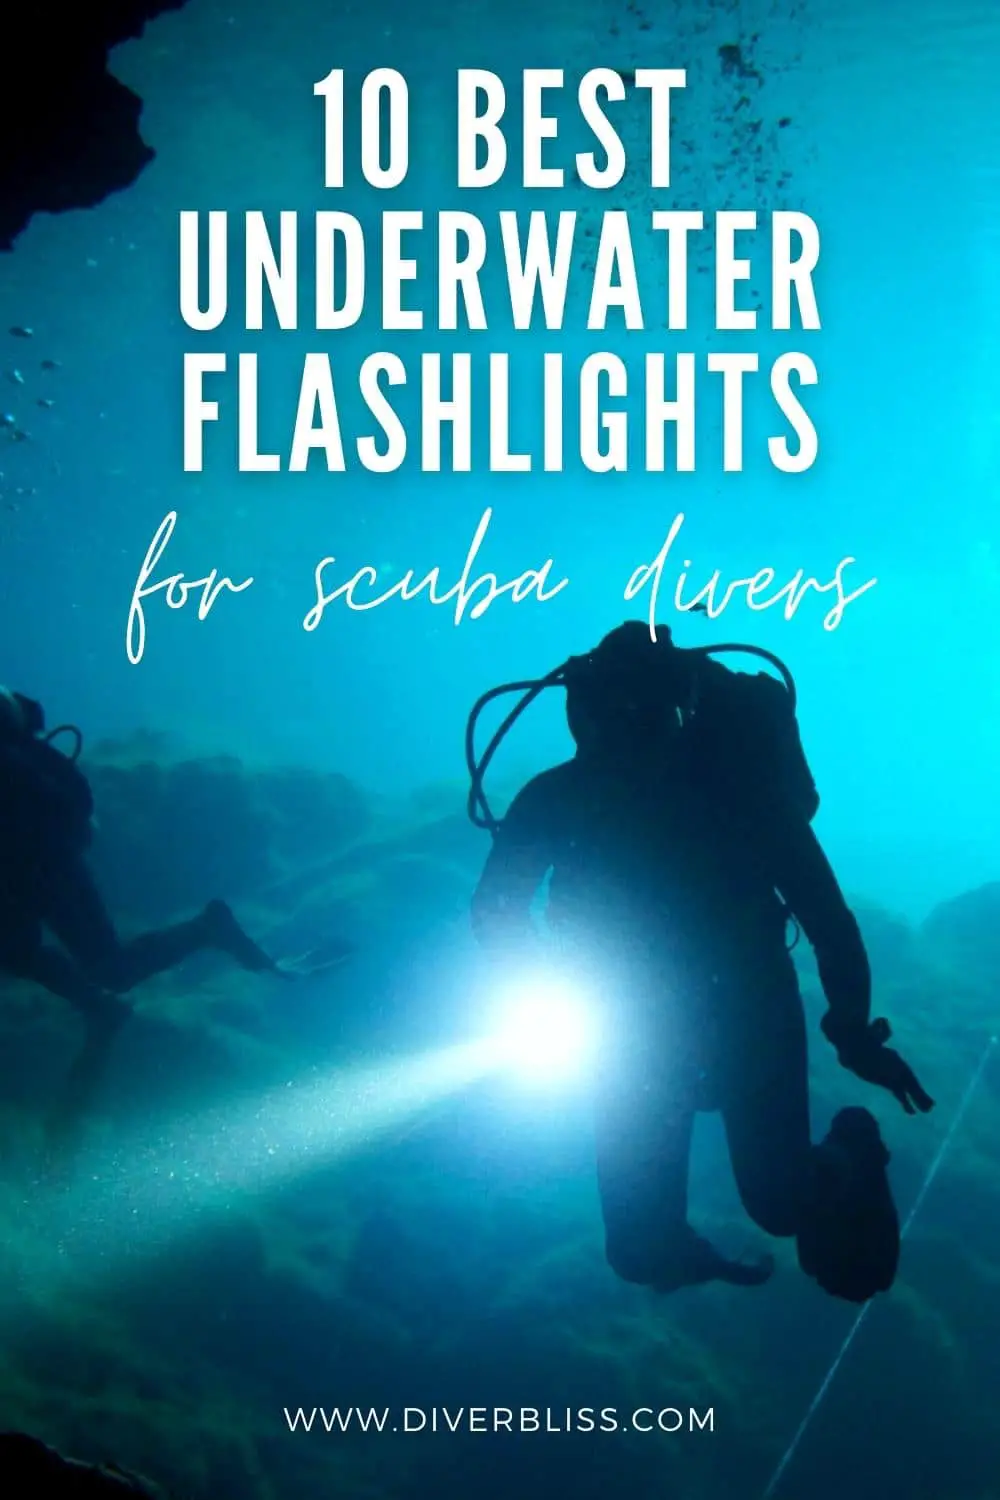 10 best underwater flashlights for scuba divers